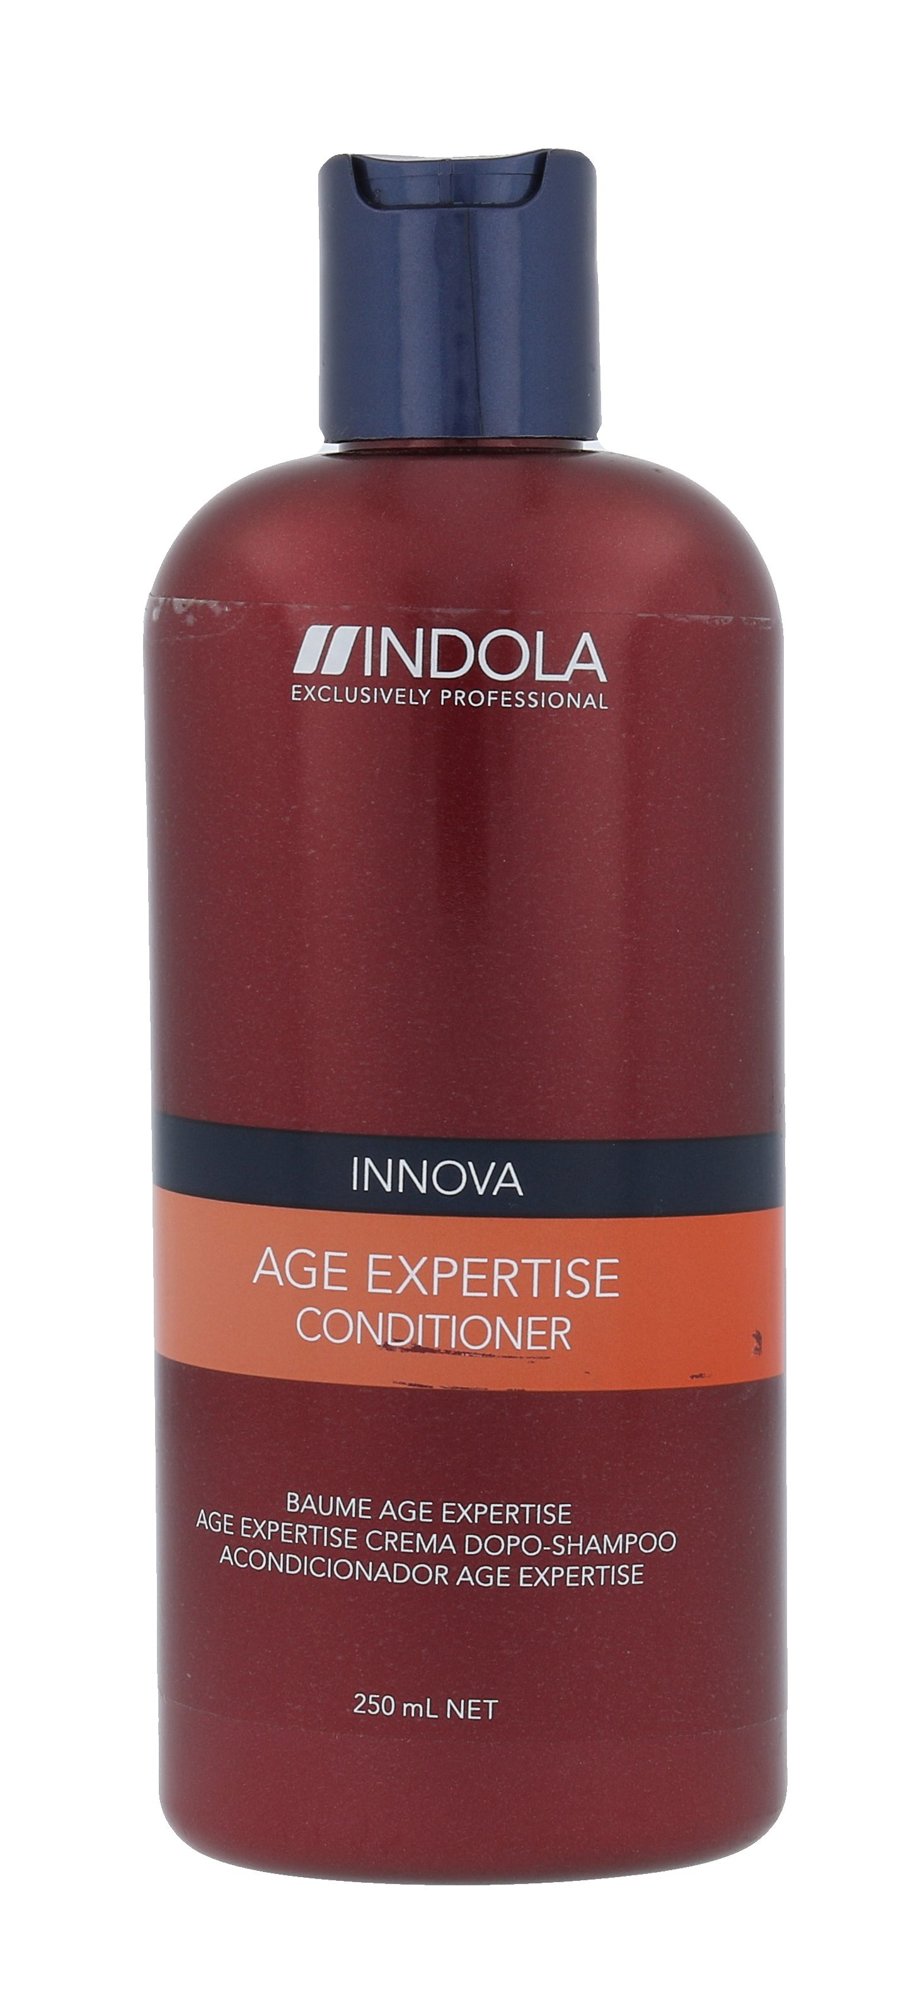 Indola Innova Age Expertise Conditioner